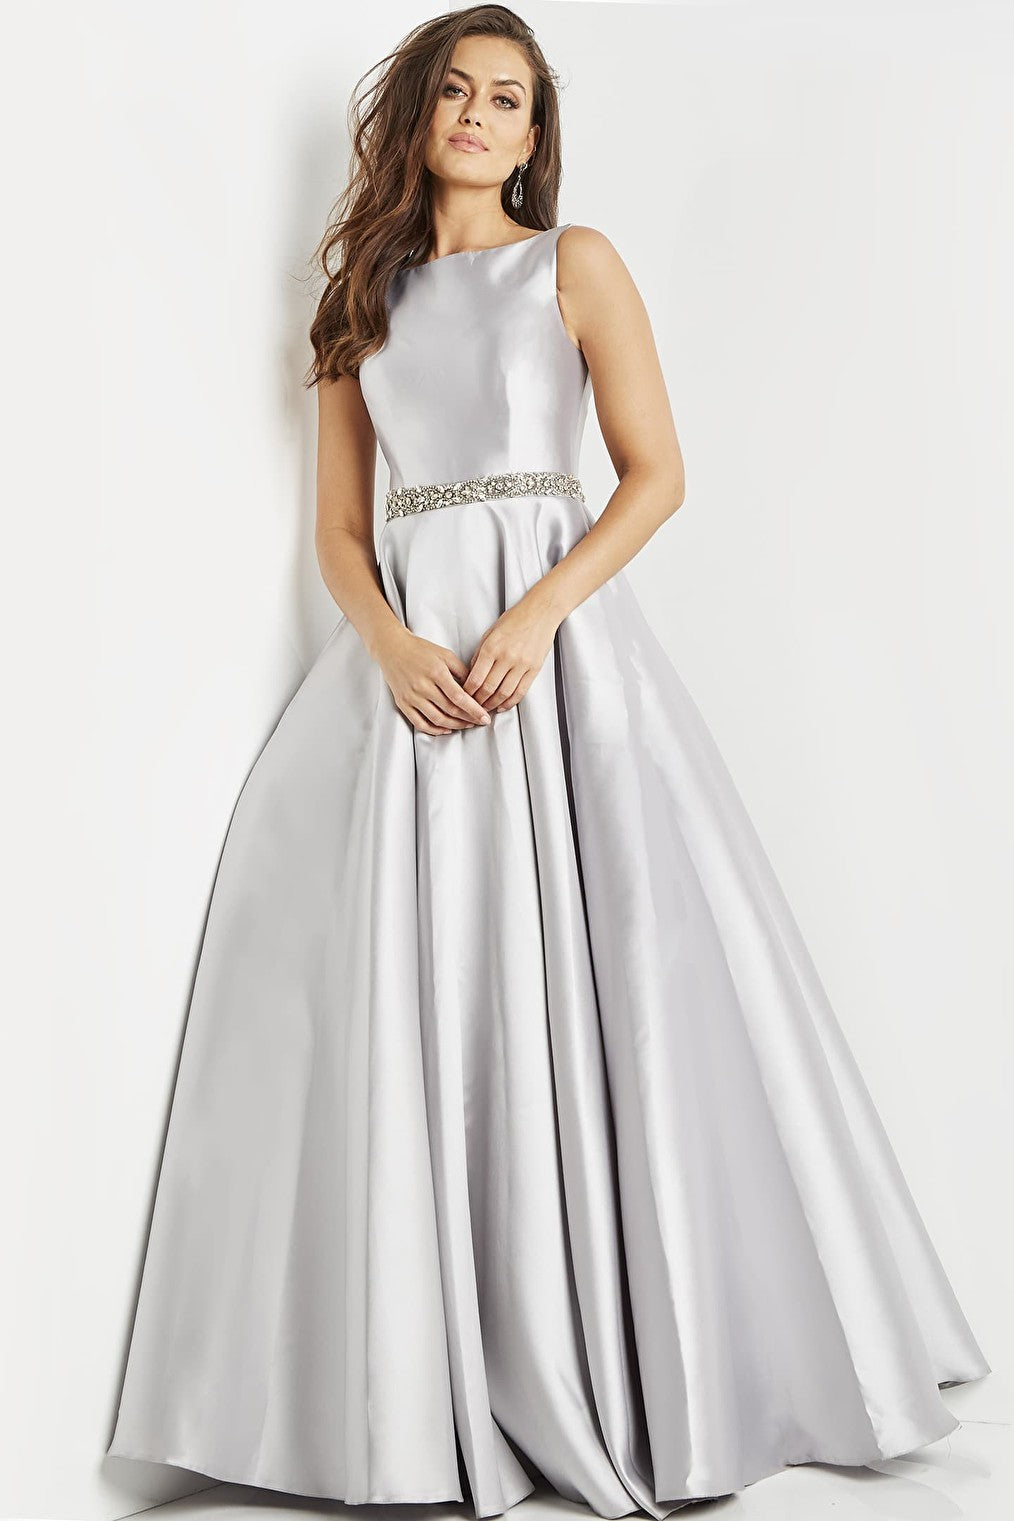 Slender Rhinestone Wedding Dress Bridal Sash Belt in Silver